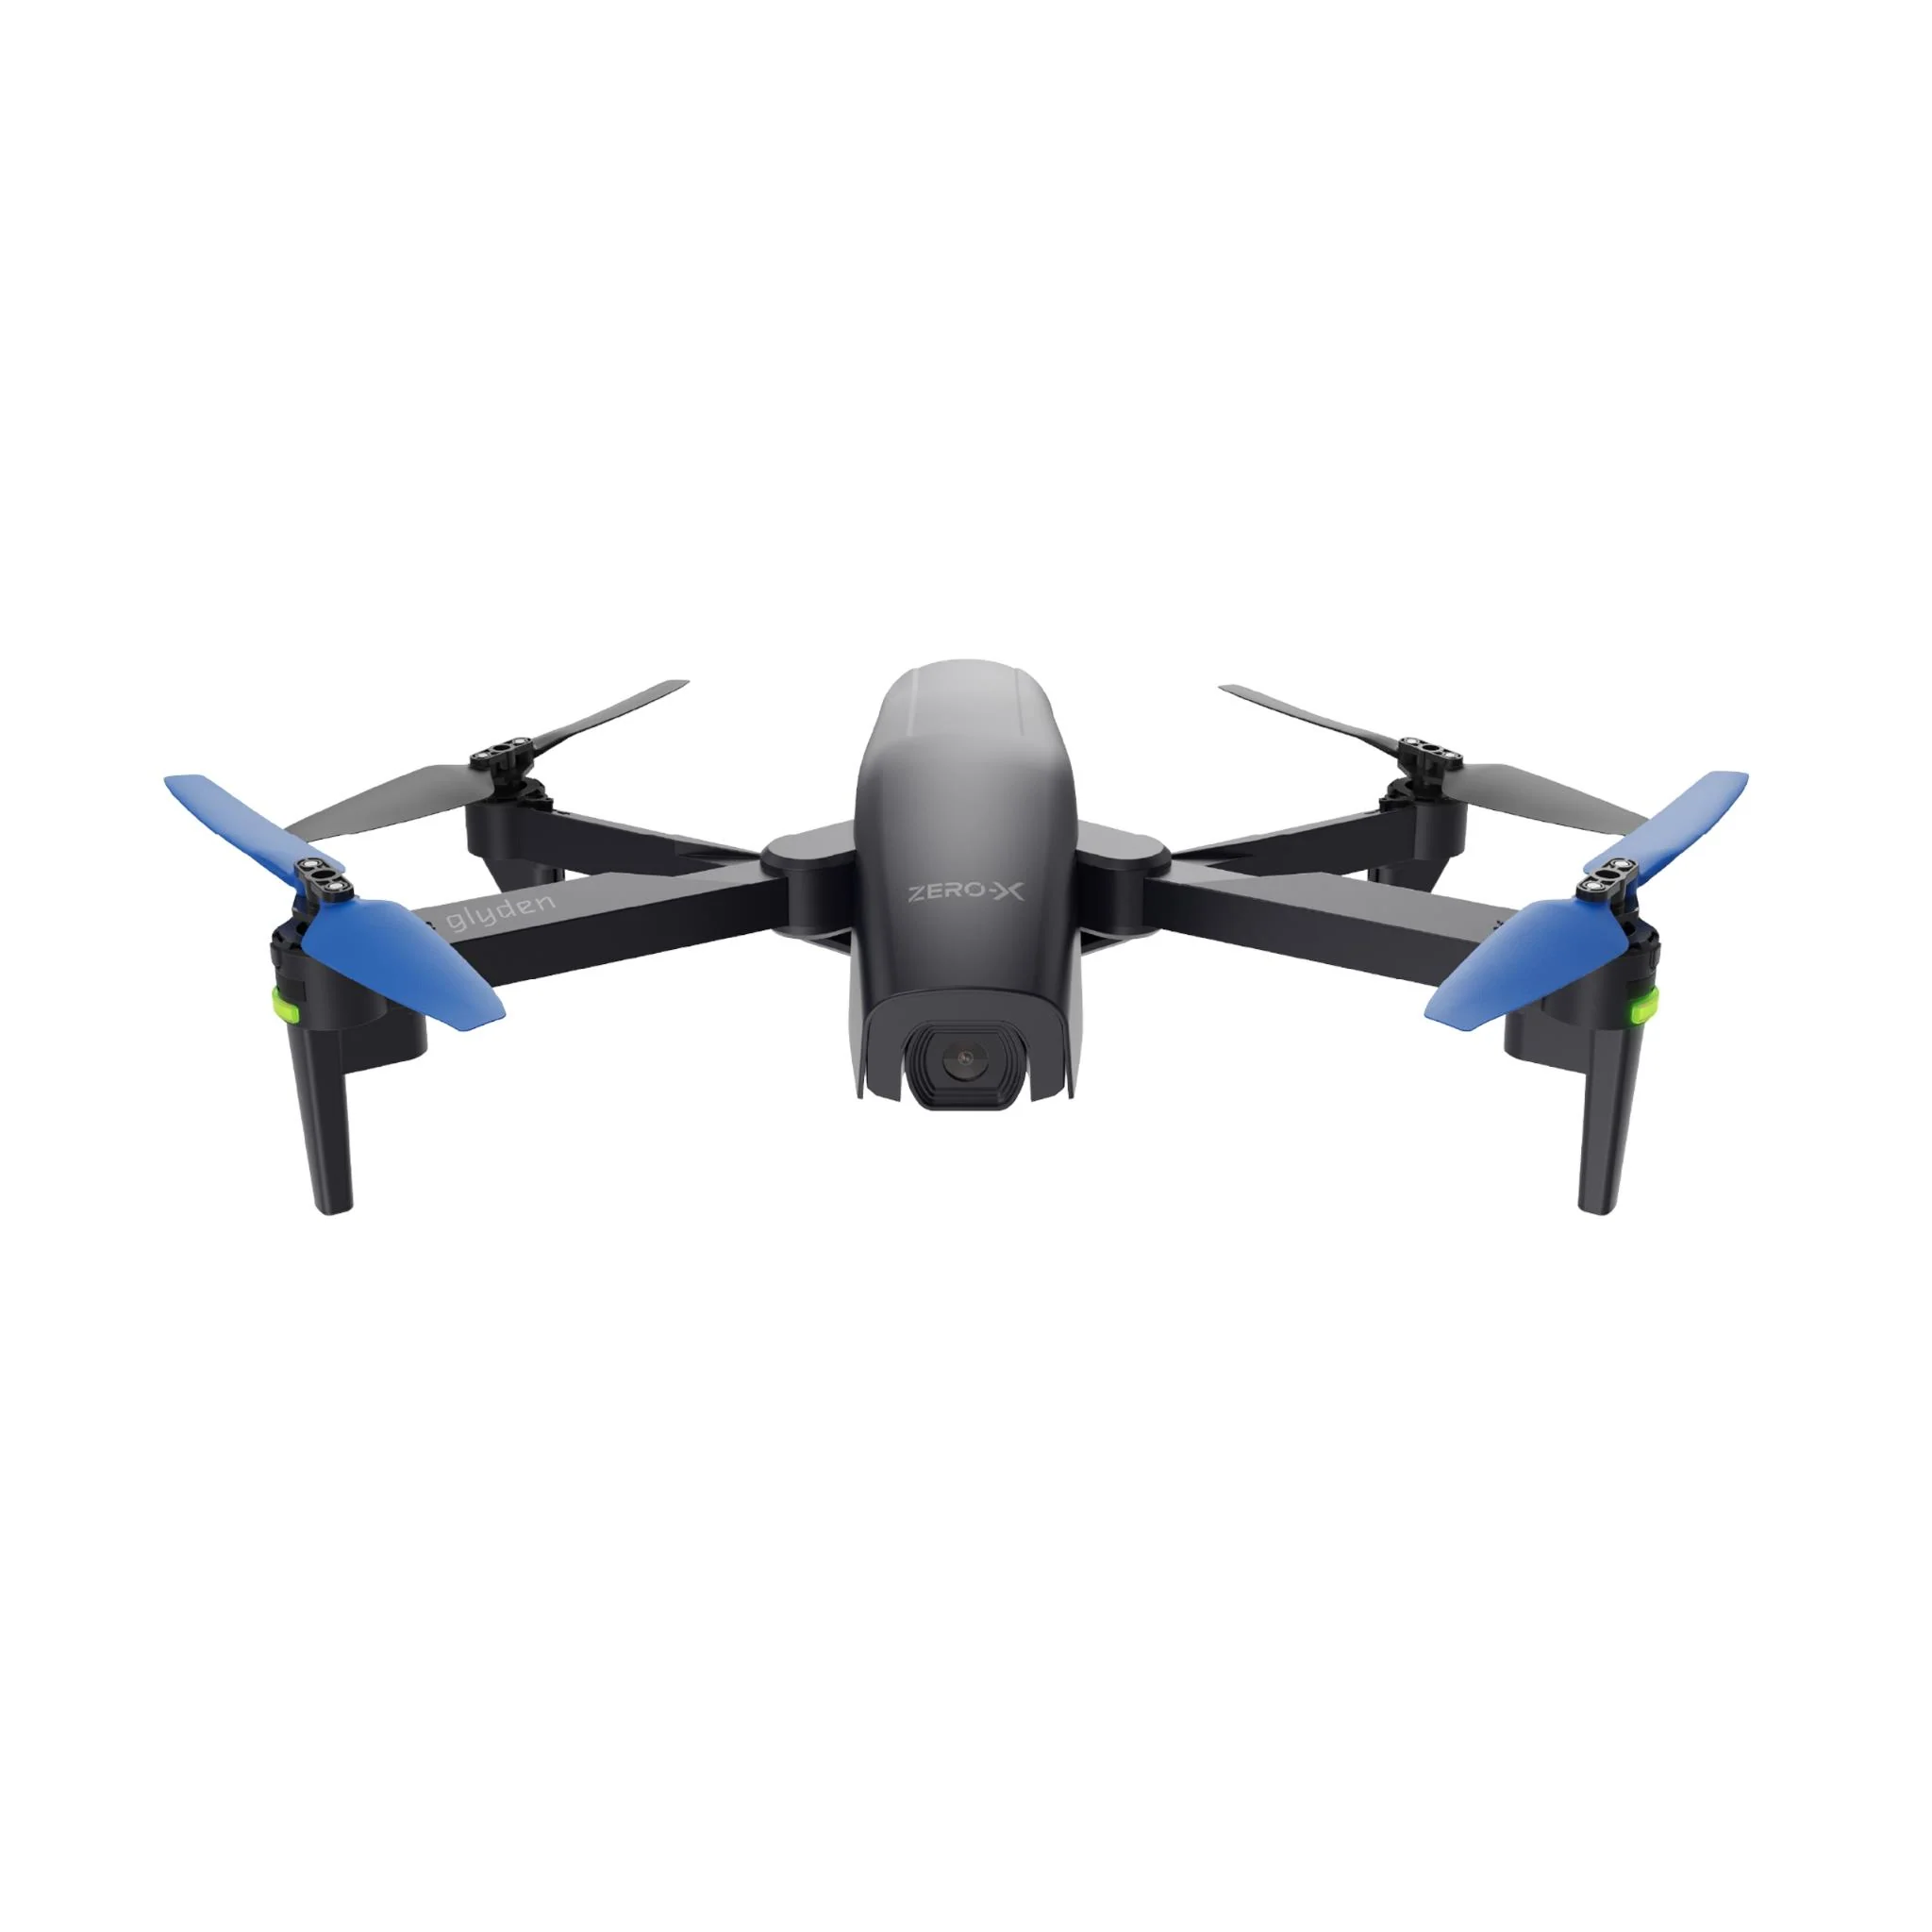 Zero-X Glyden Full HD Drone With WiFi